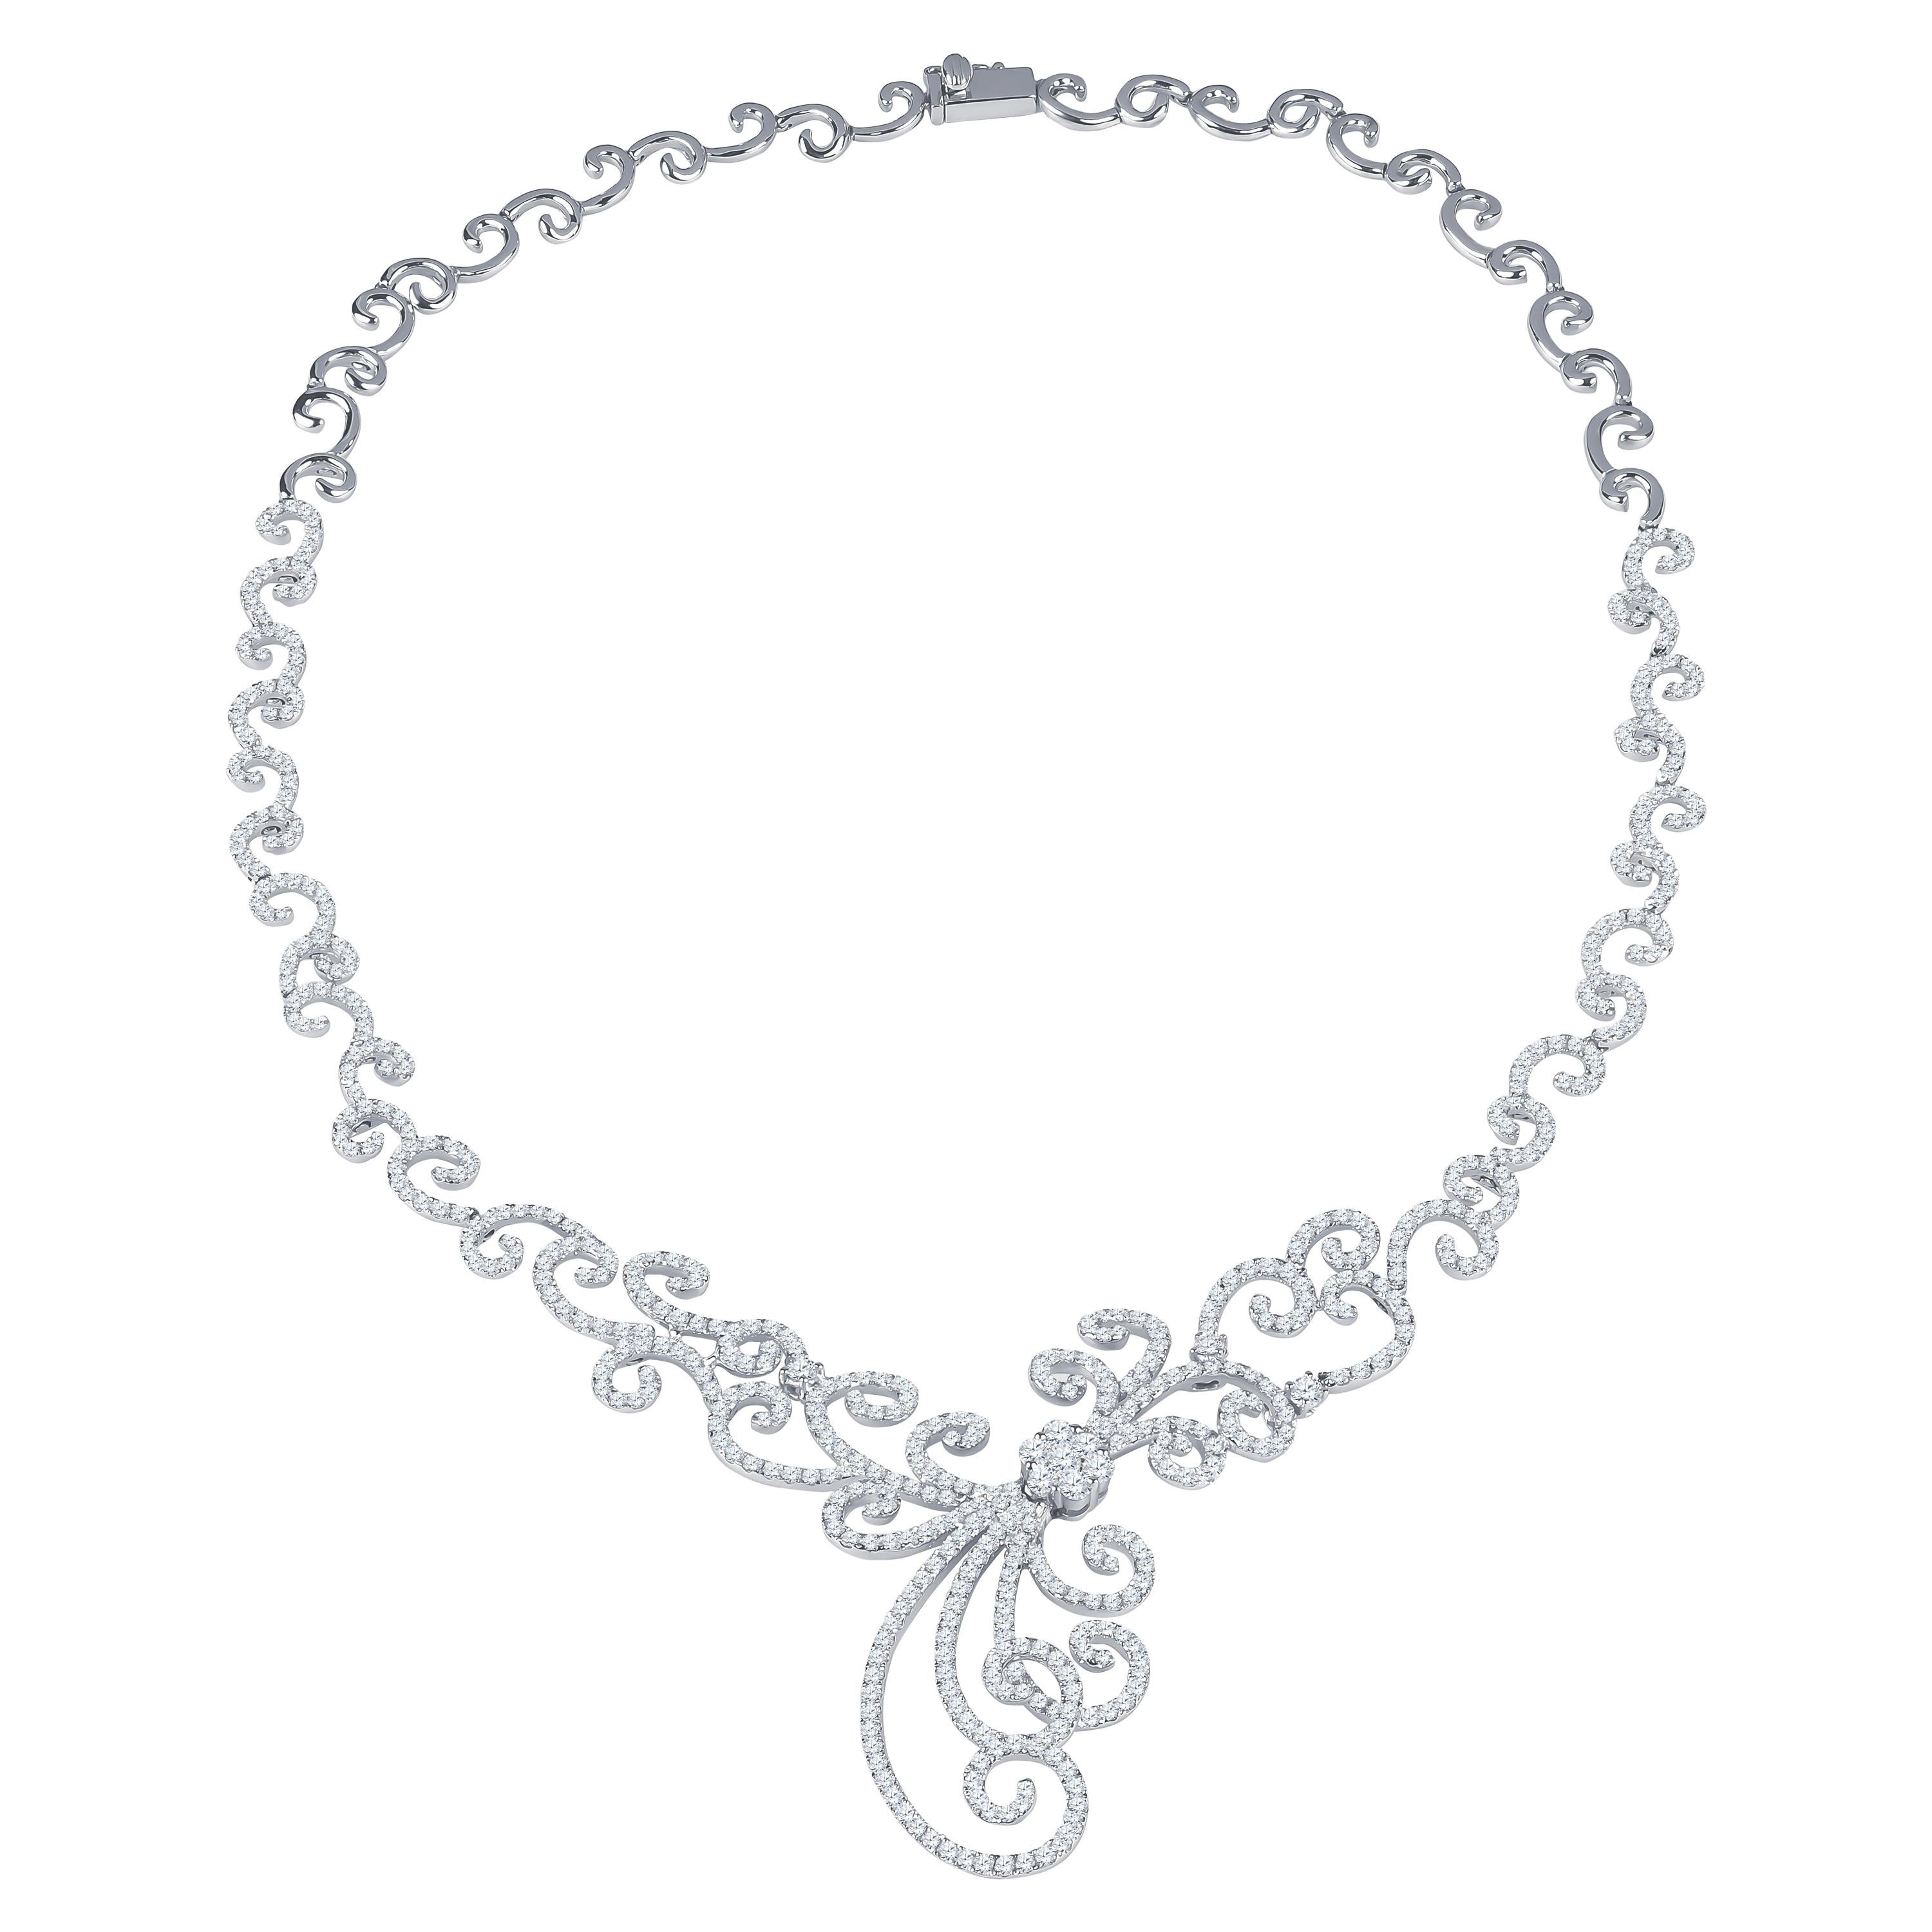 11.04 Carat Diamond Swirl Style Necklace in 18k White Gold, F-H VS2-SI1 